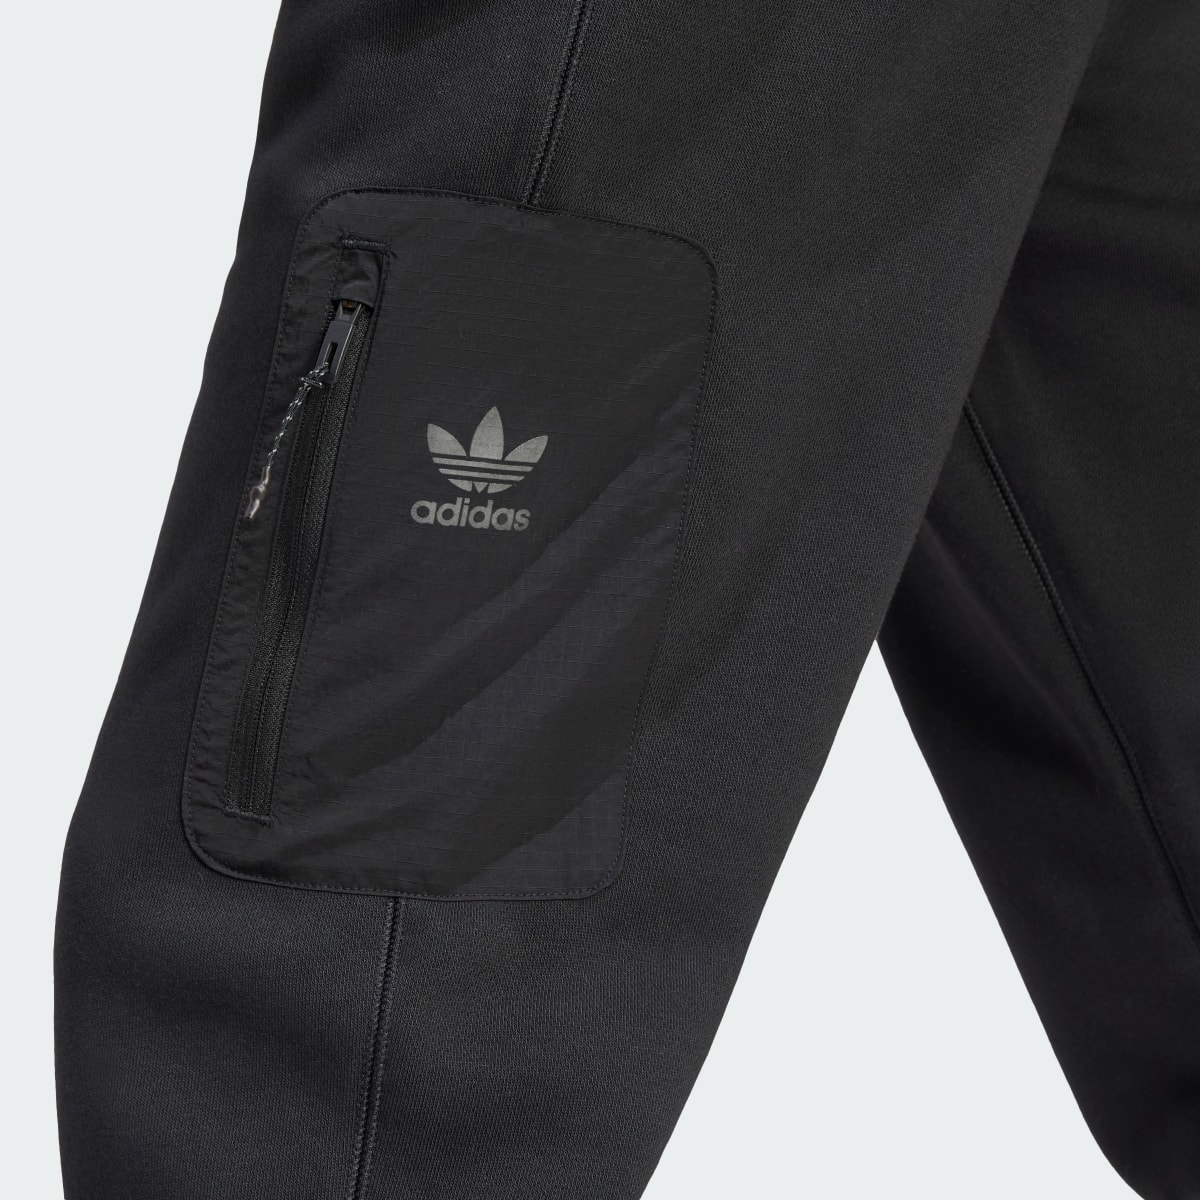 Adidas Sweat pants. 5